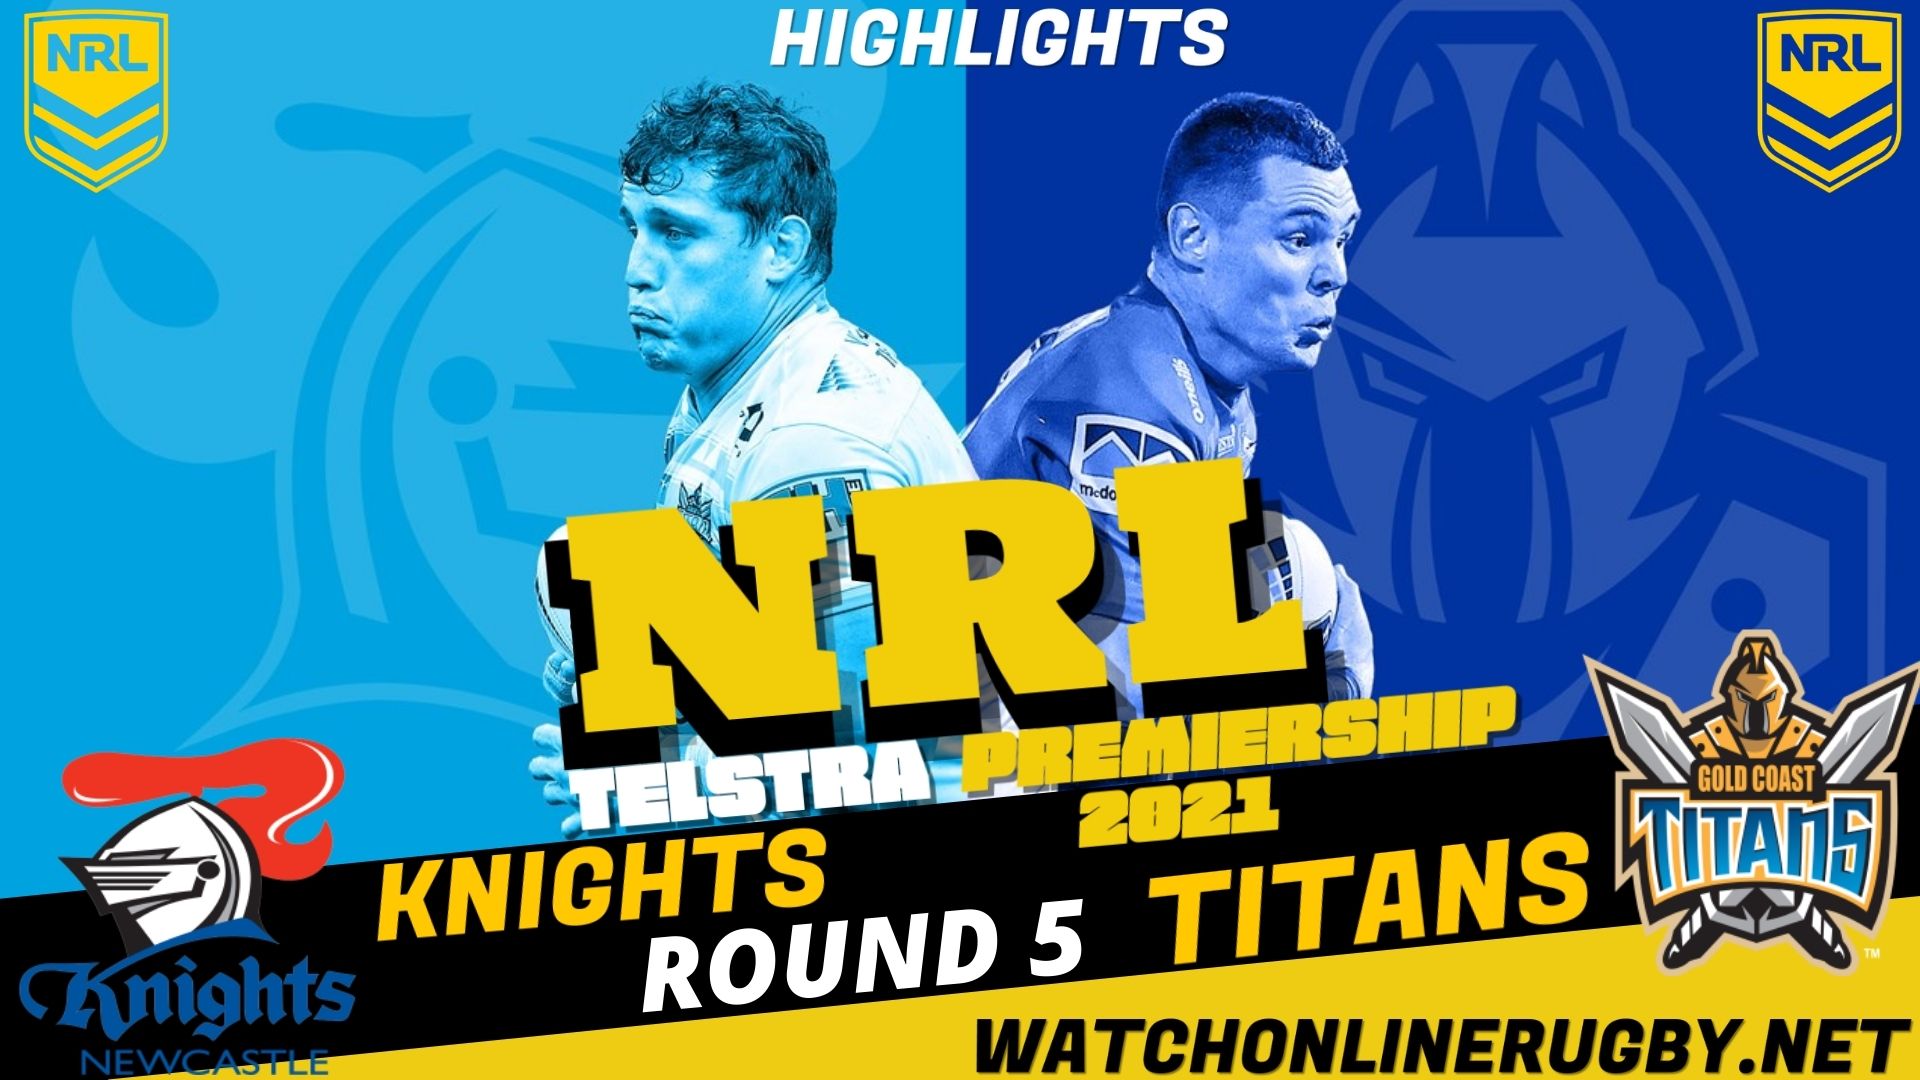 Titans Vs Knights Highlights RD 5 NRL Rugby